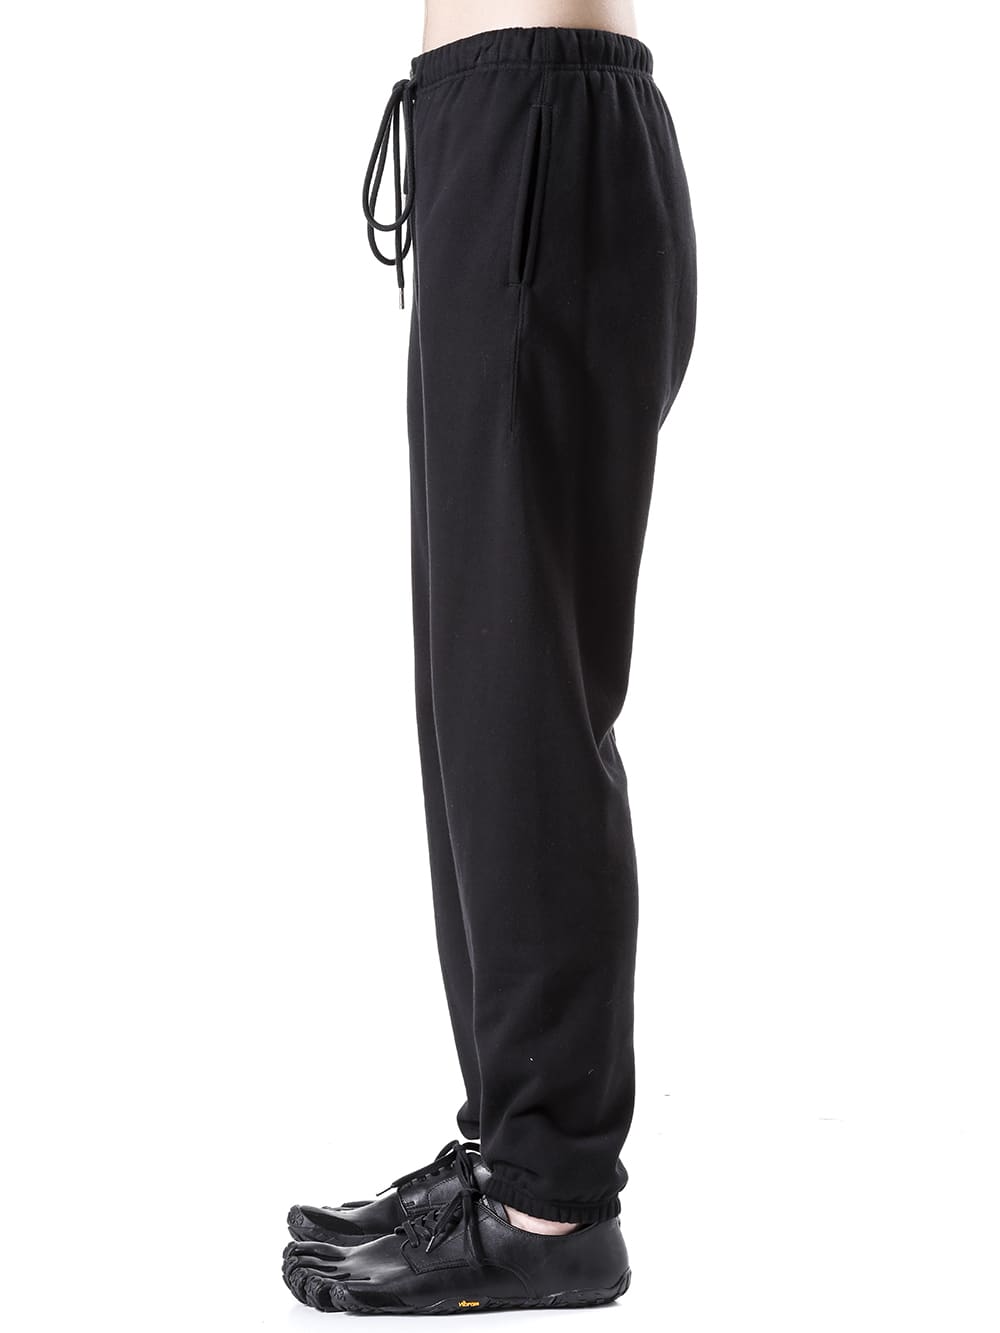 sp.0005AW22_black reverse jogger zipper pant. TheSoloist 